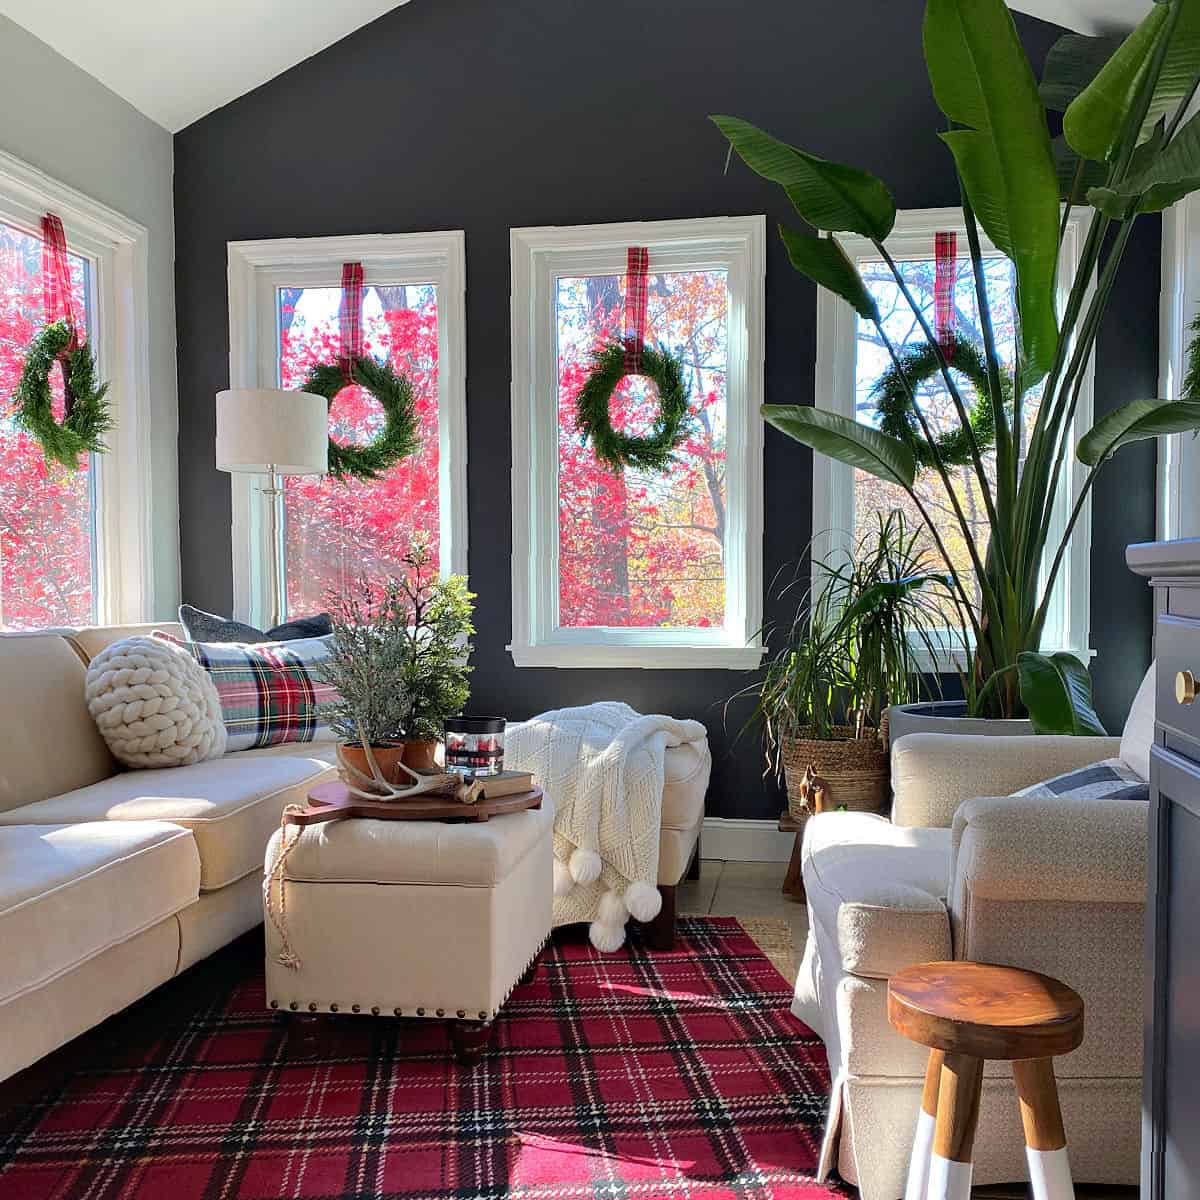 Genius Way to Hang Wreaths on Inside Windows